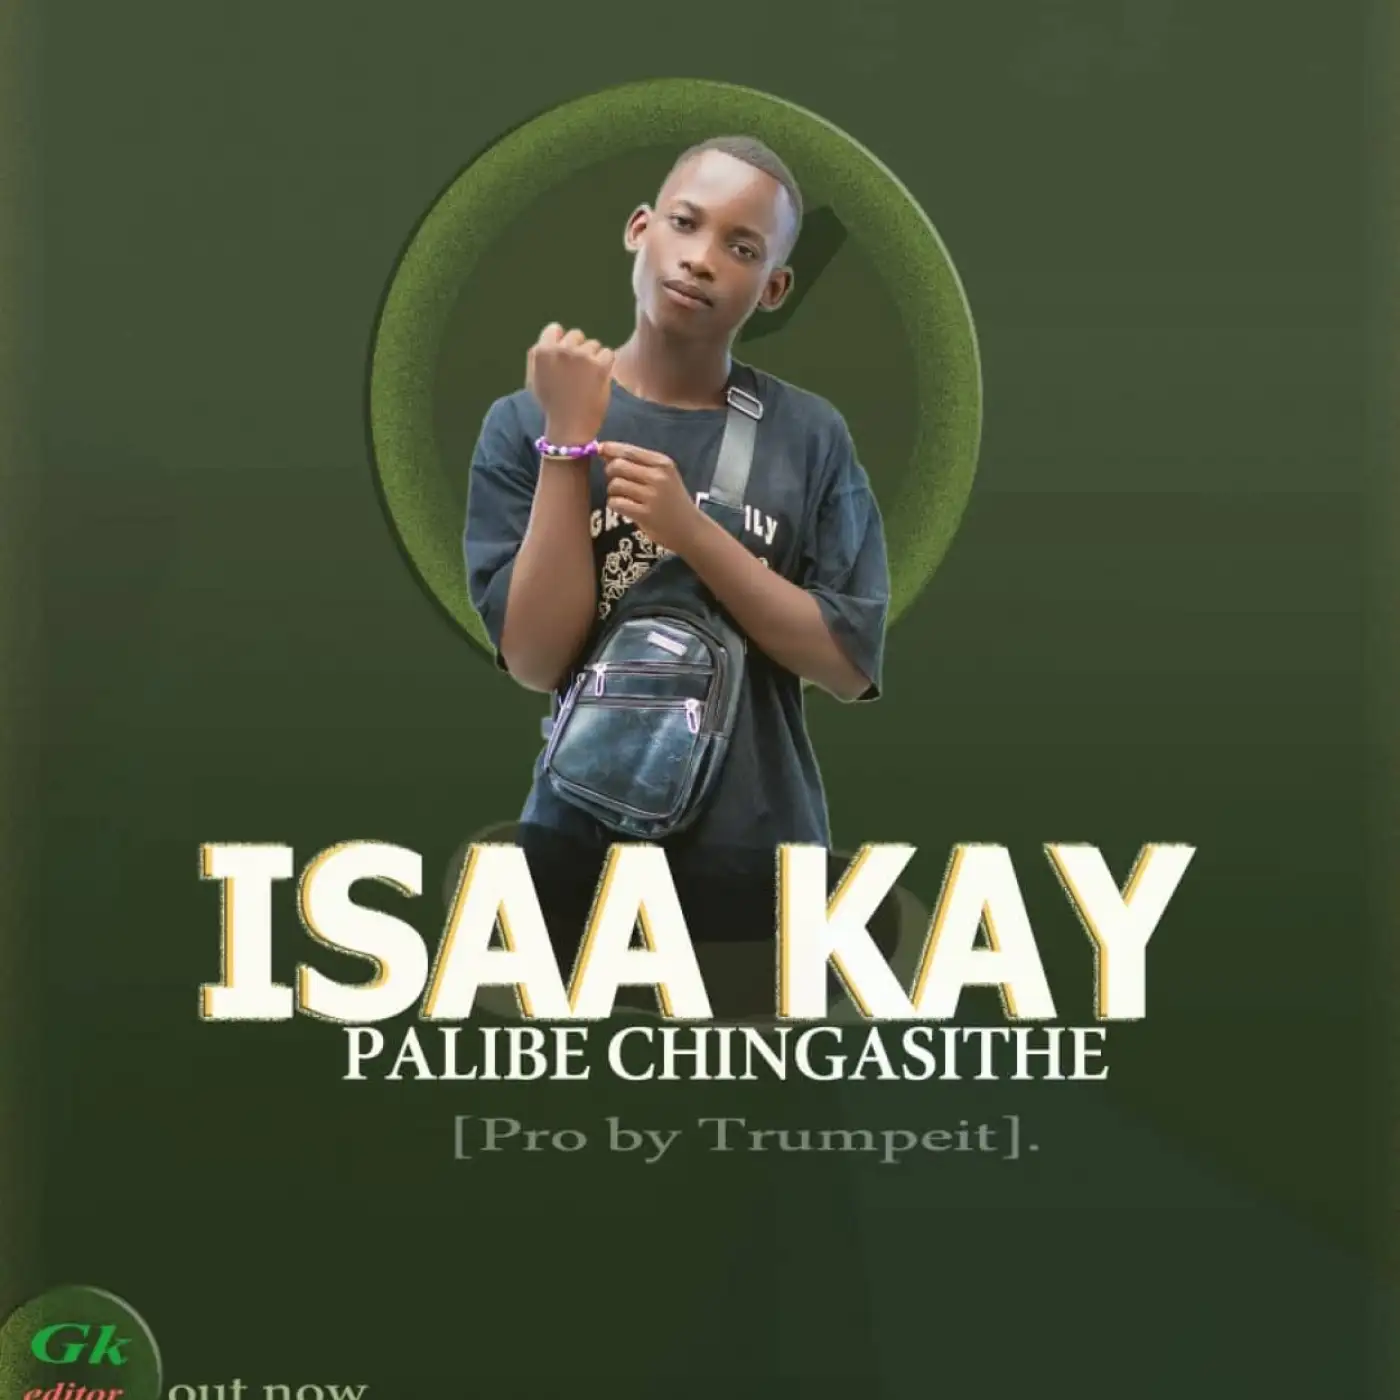 Isaa kay-Isaa kay - Palibe Chingasinthe (Prod. Trumpeit)-song artwork cover